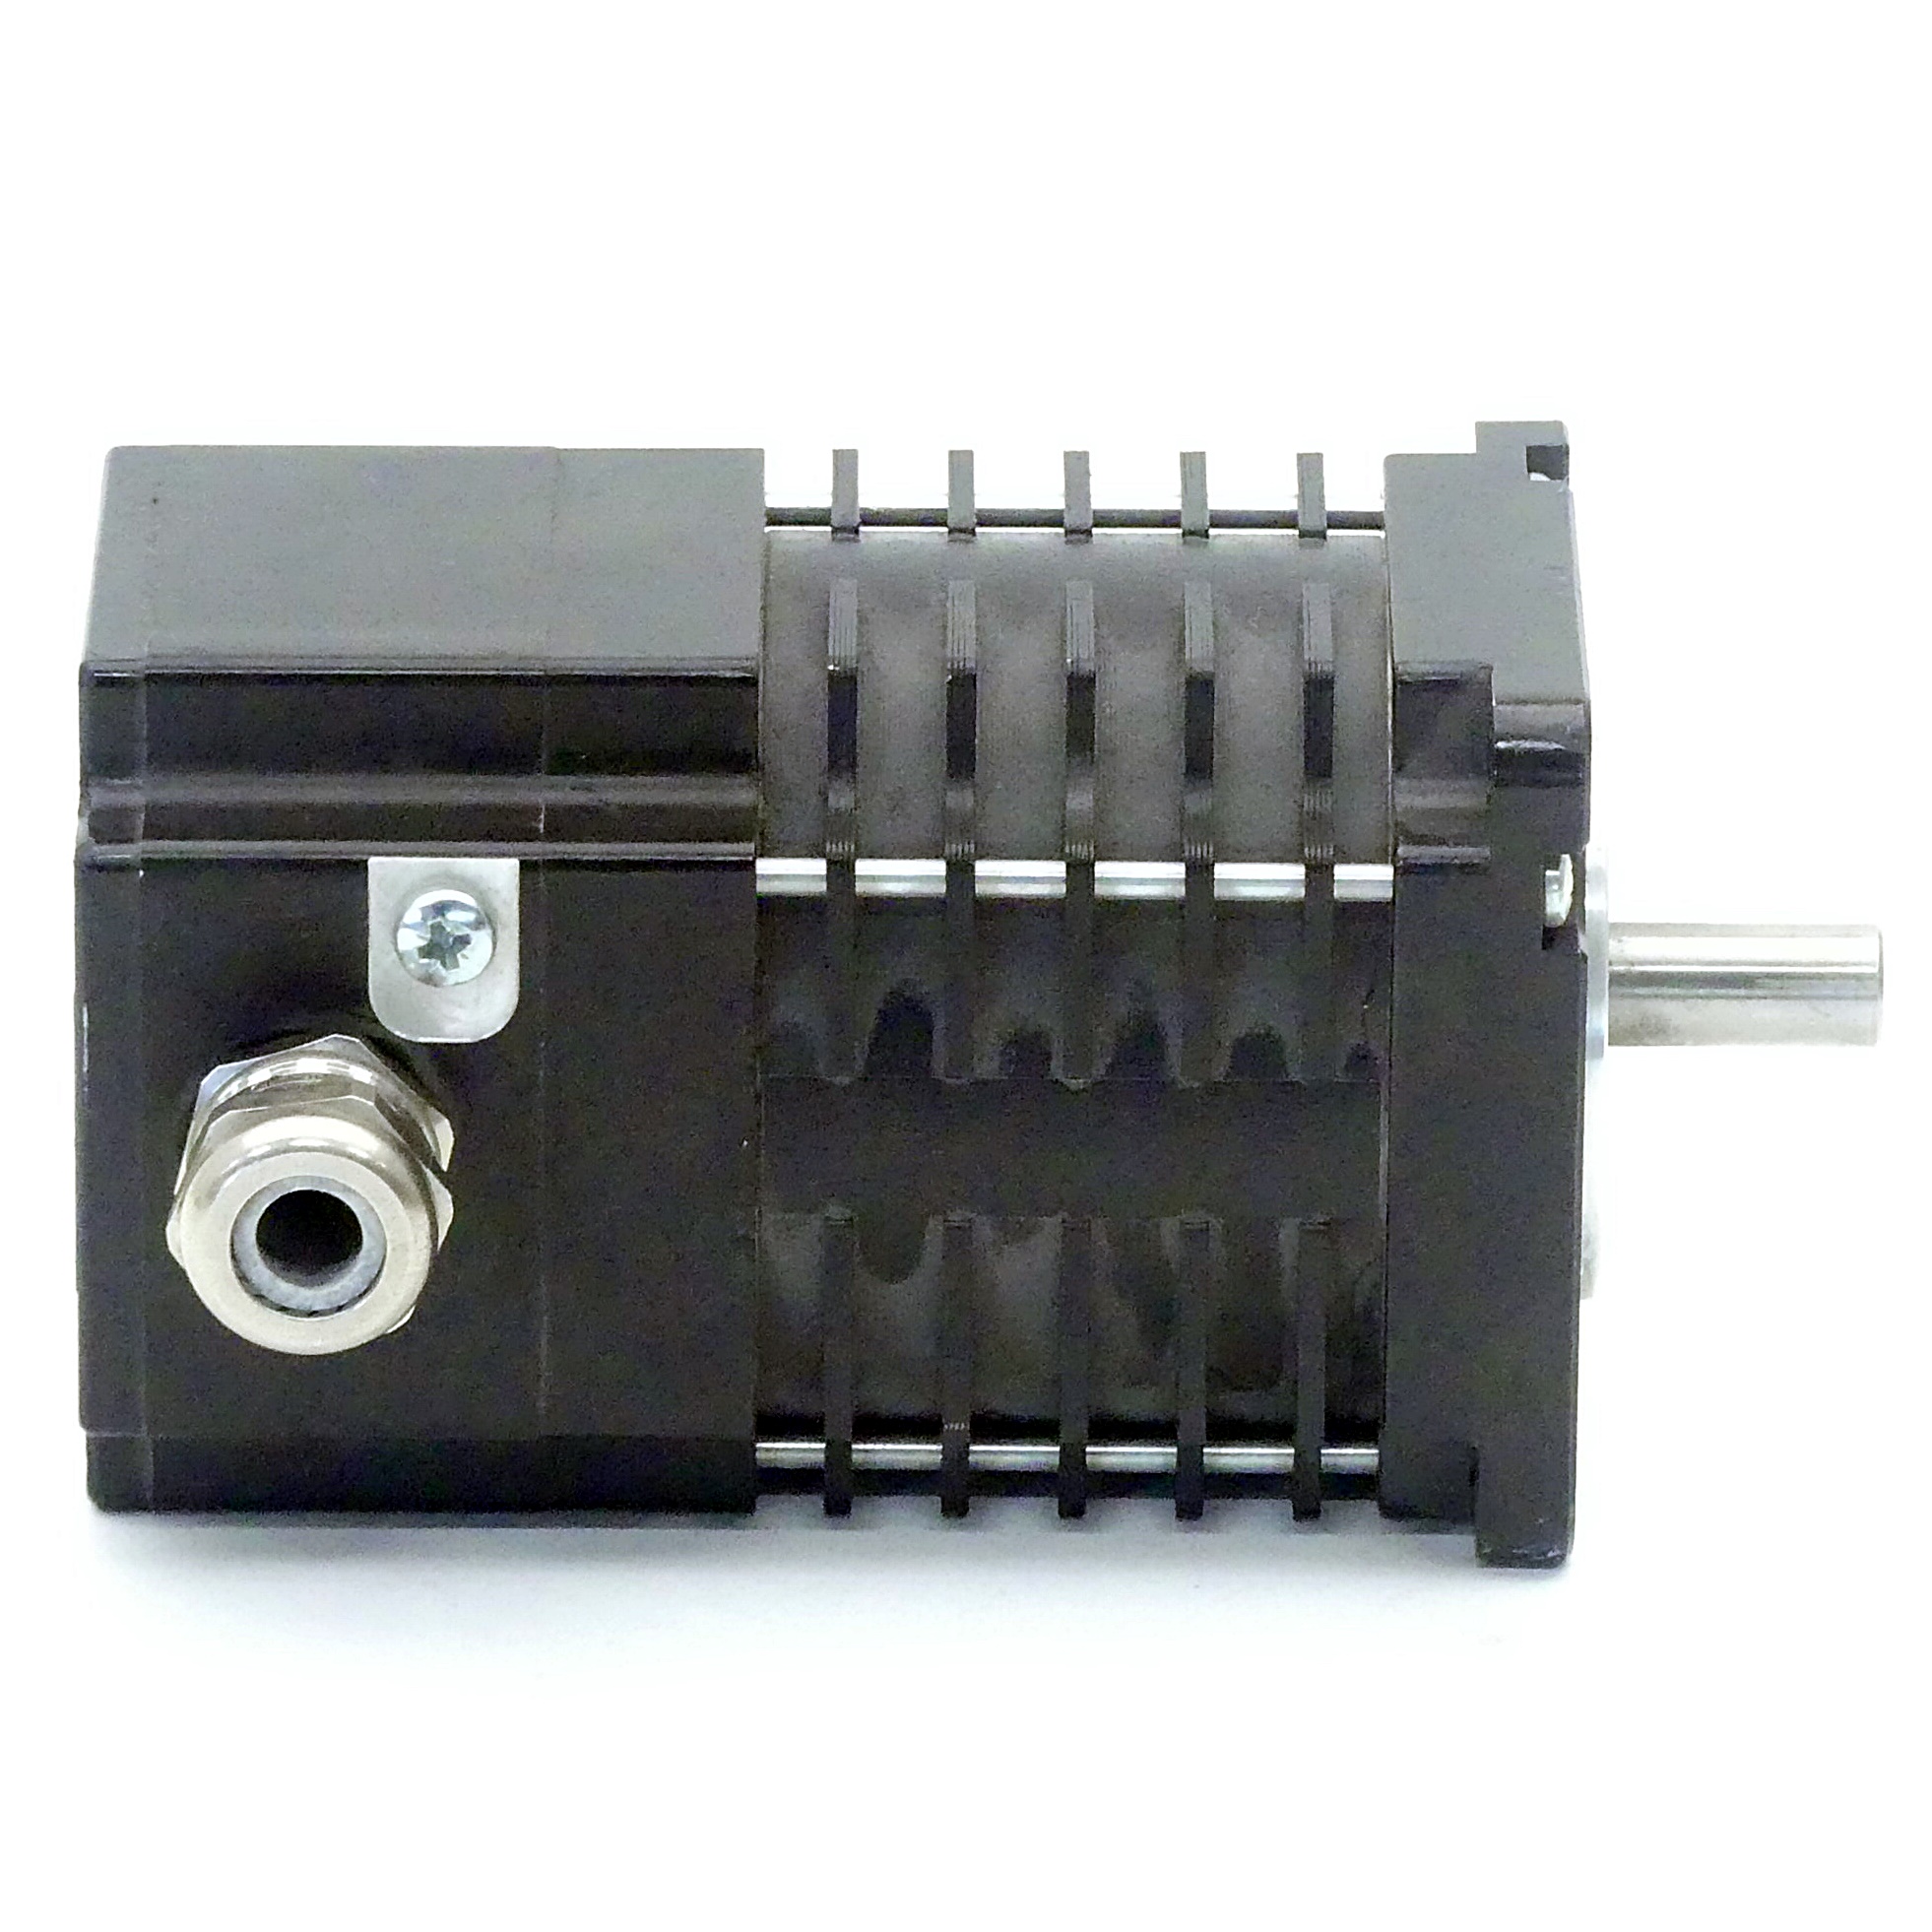 Schrittmotor VRDM4910/50 LNB 